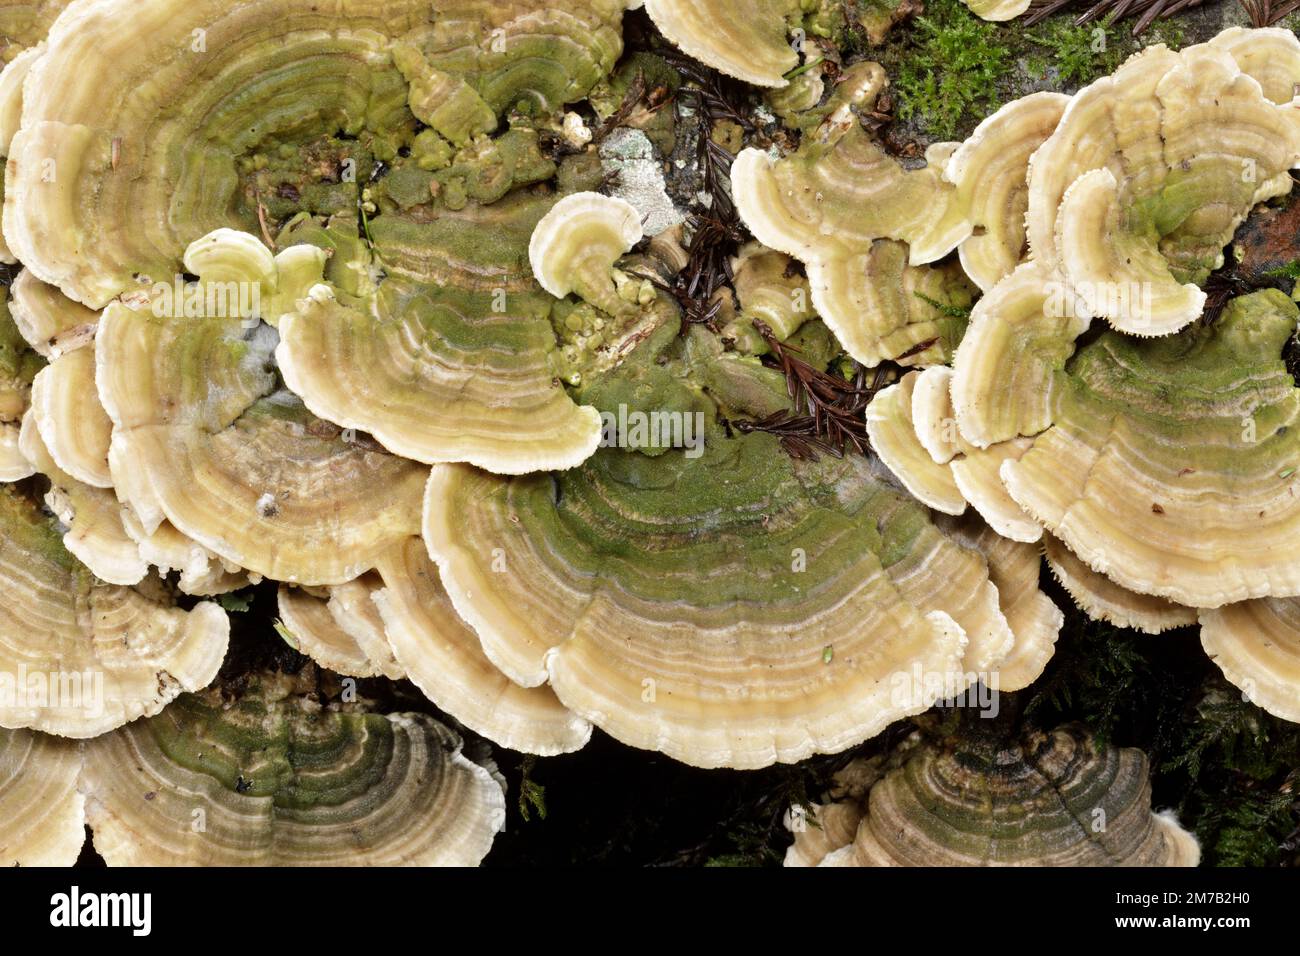 Trametes betulina mushroom cluster growing on dead conifer stump. El Corte de Madera Creek Preserve, California Stock Photo